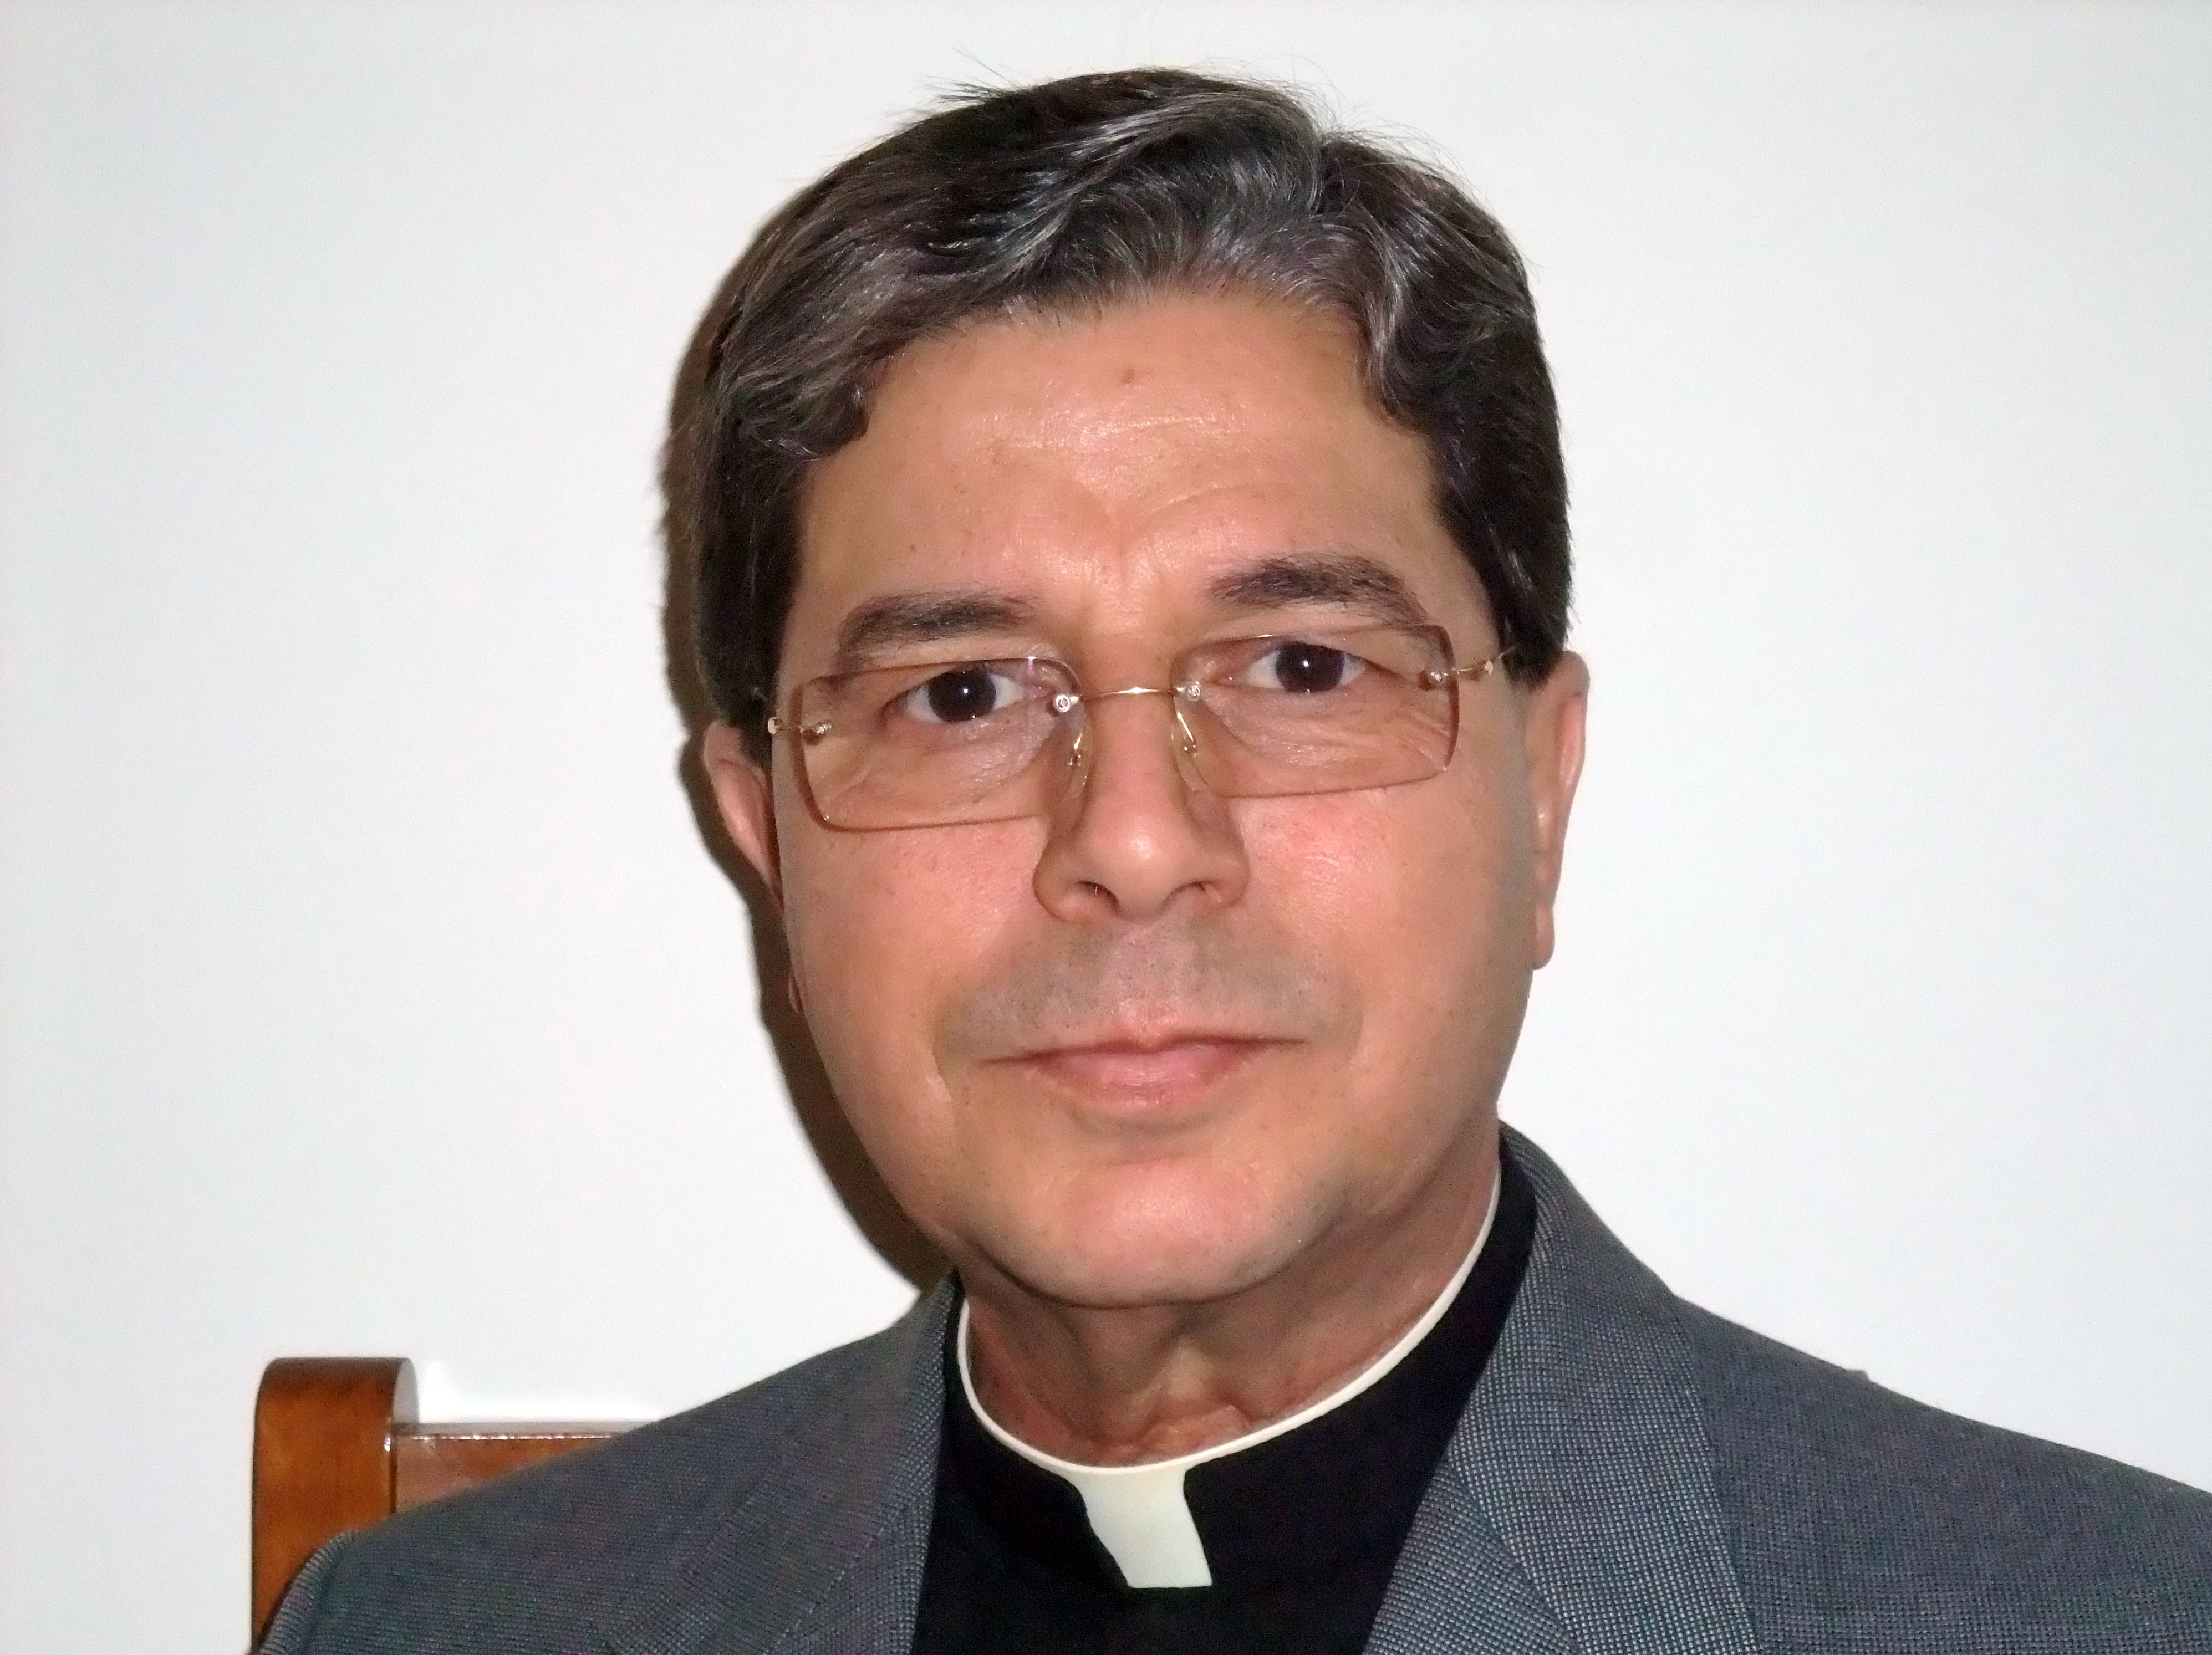 Father Stephen De Bono